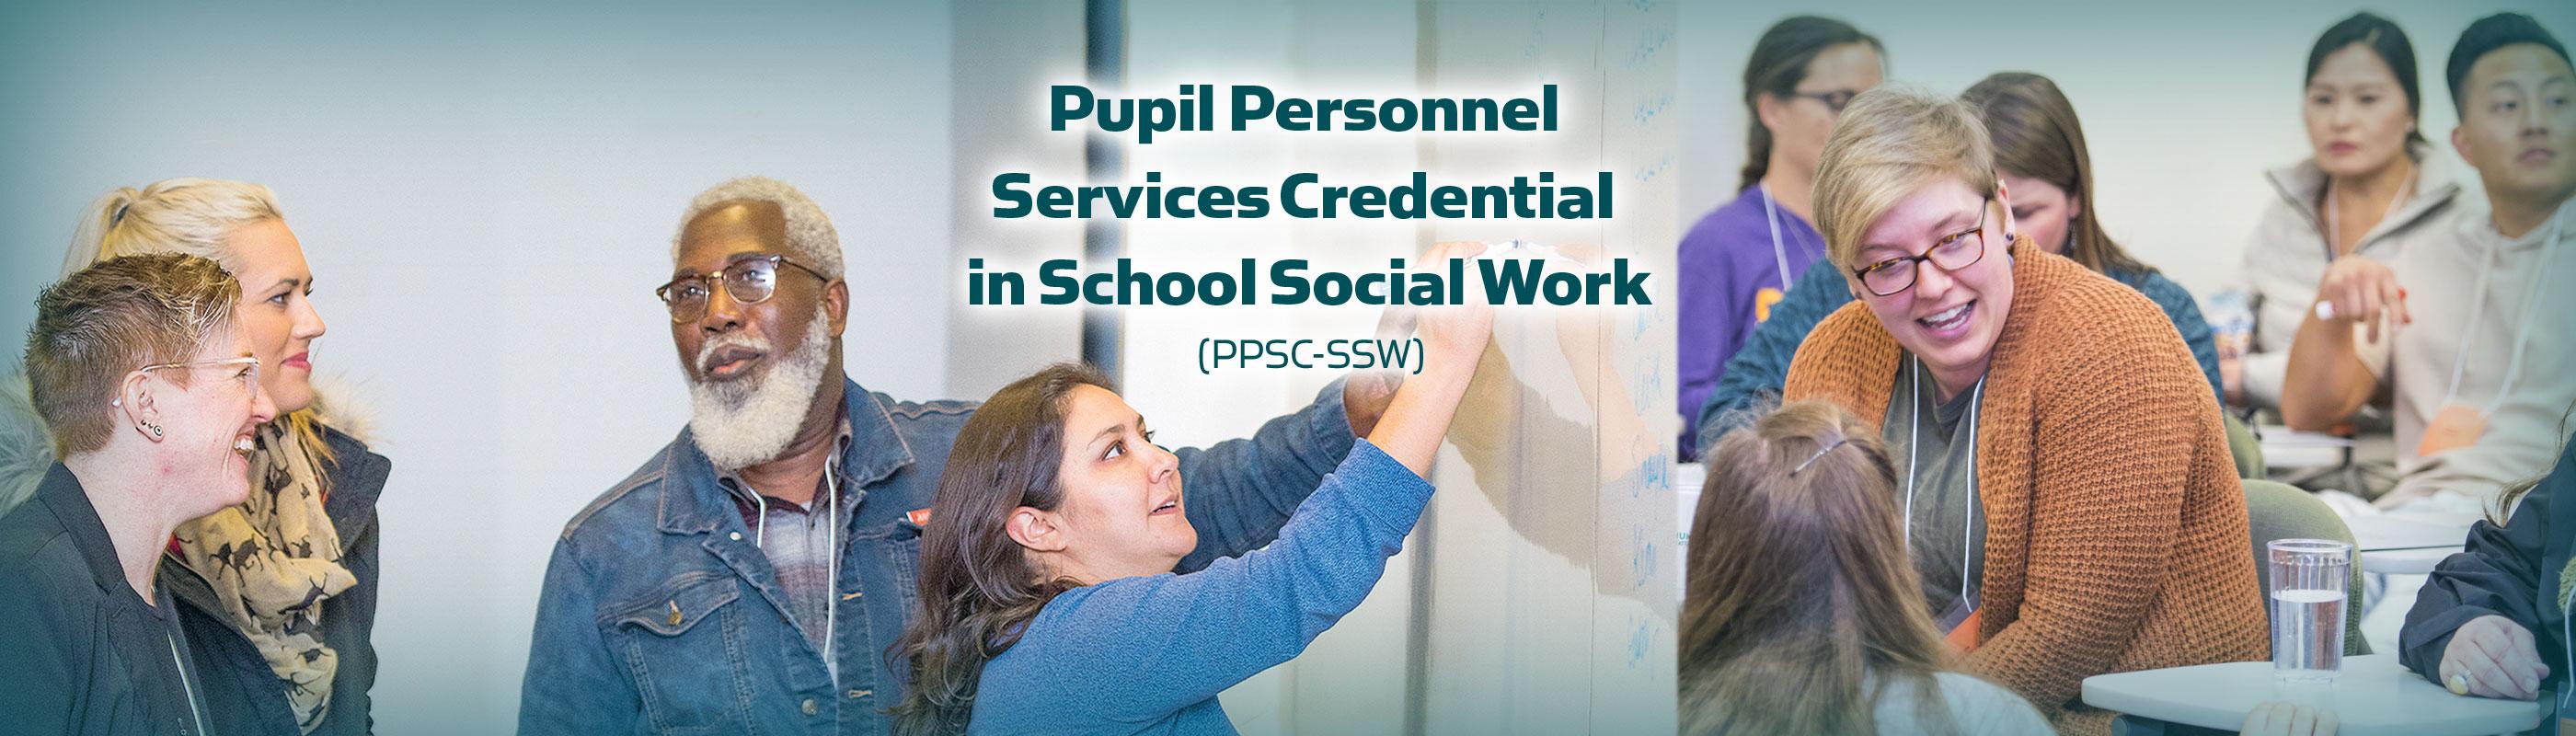 online pupil personnel services credential